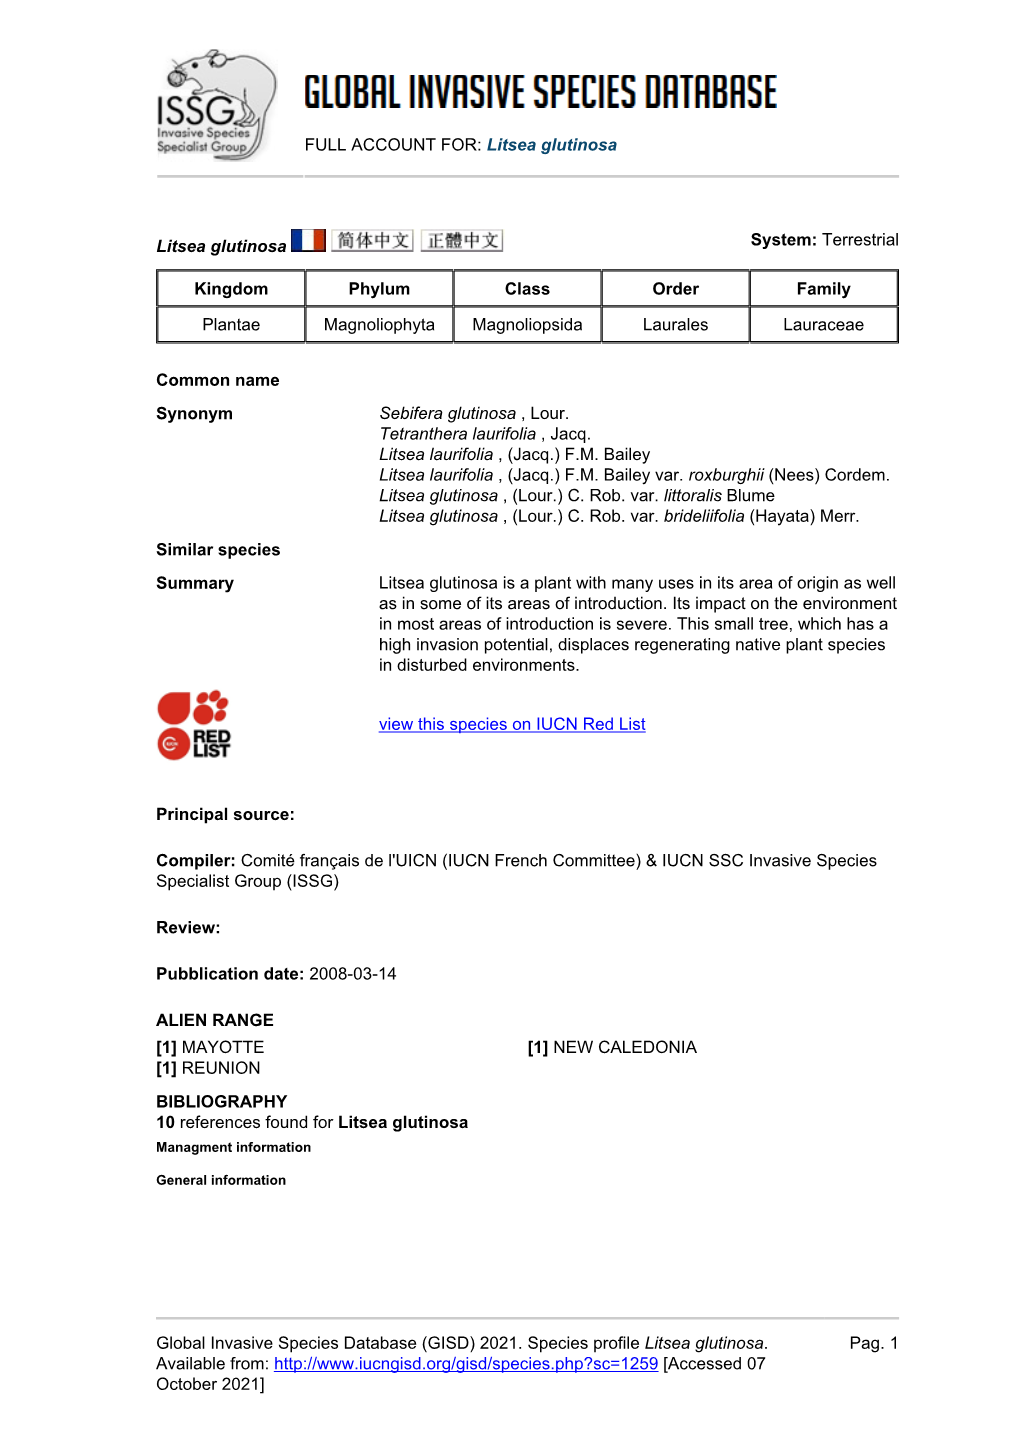 (GISD) 2021. Species Profile Litsea Glutinosa. Available